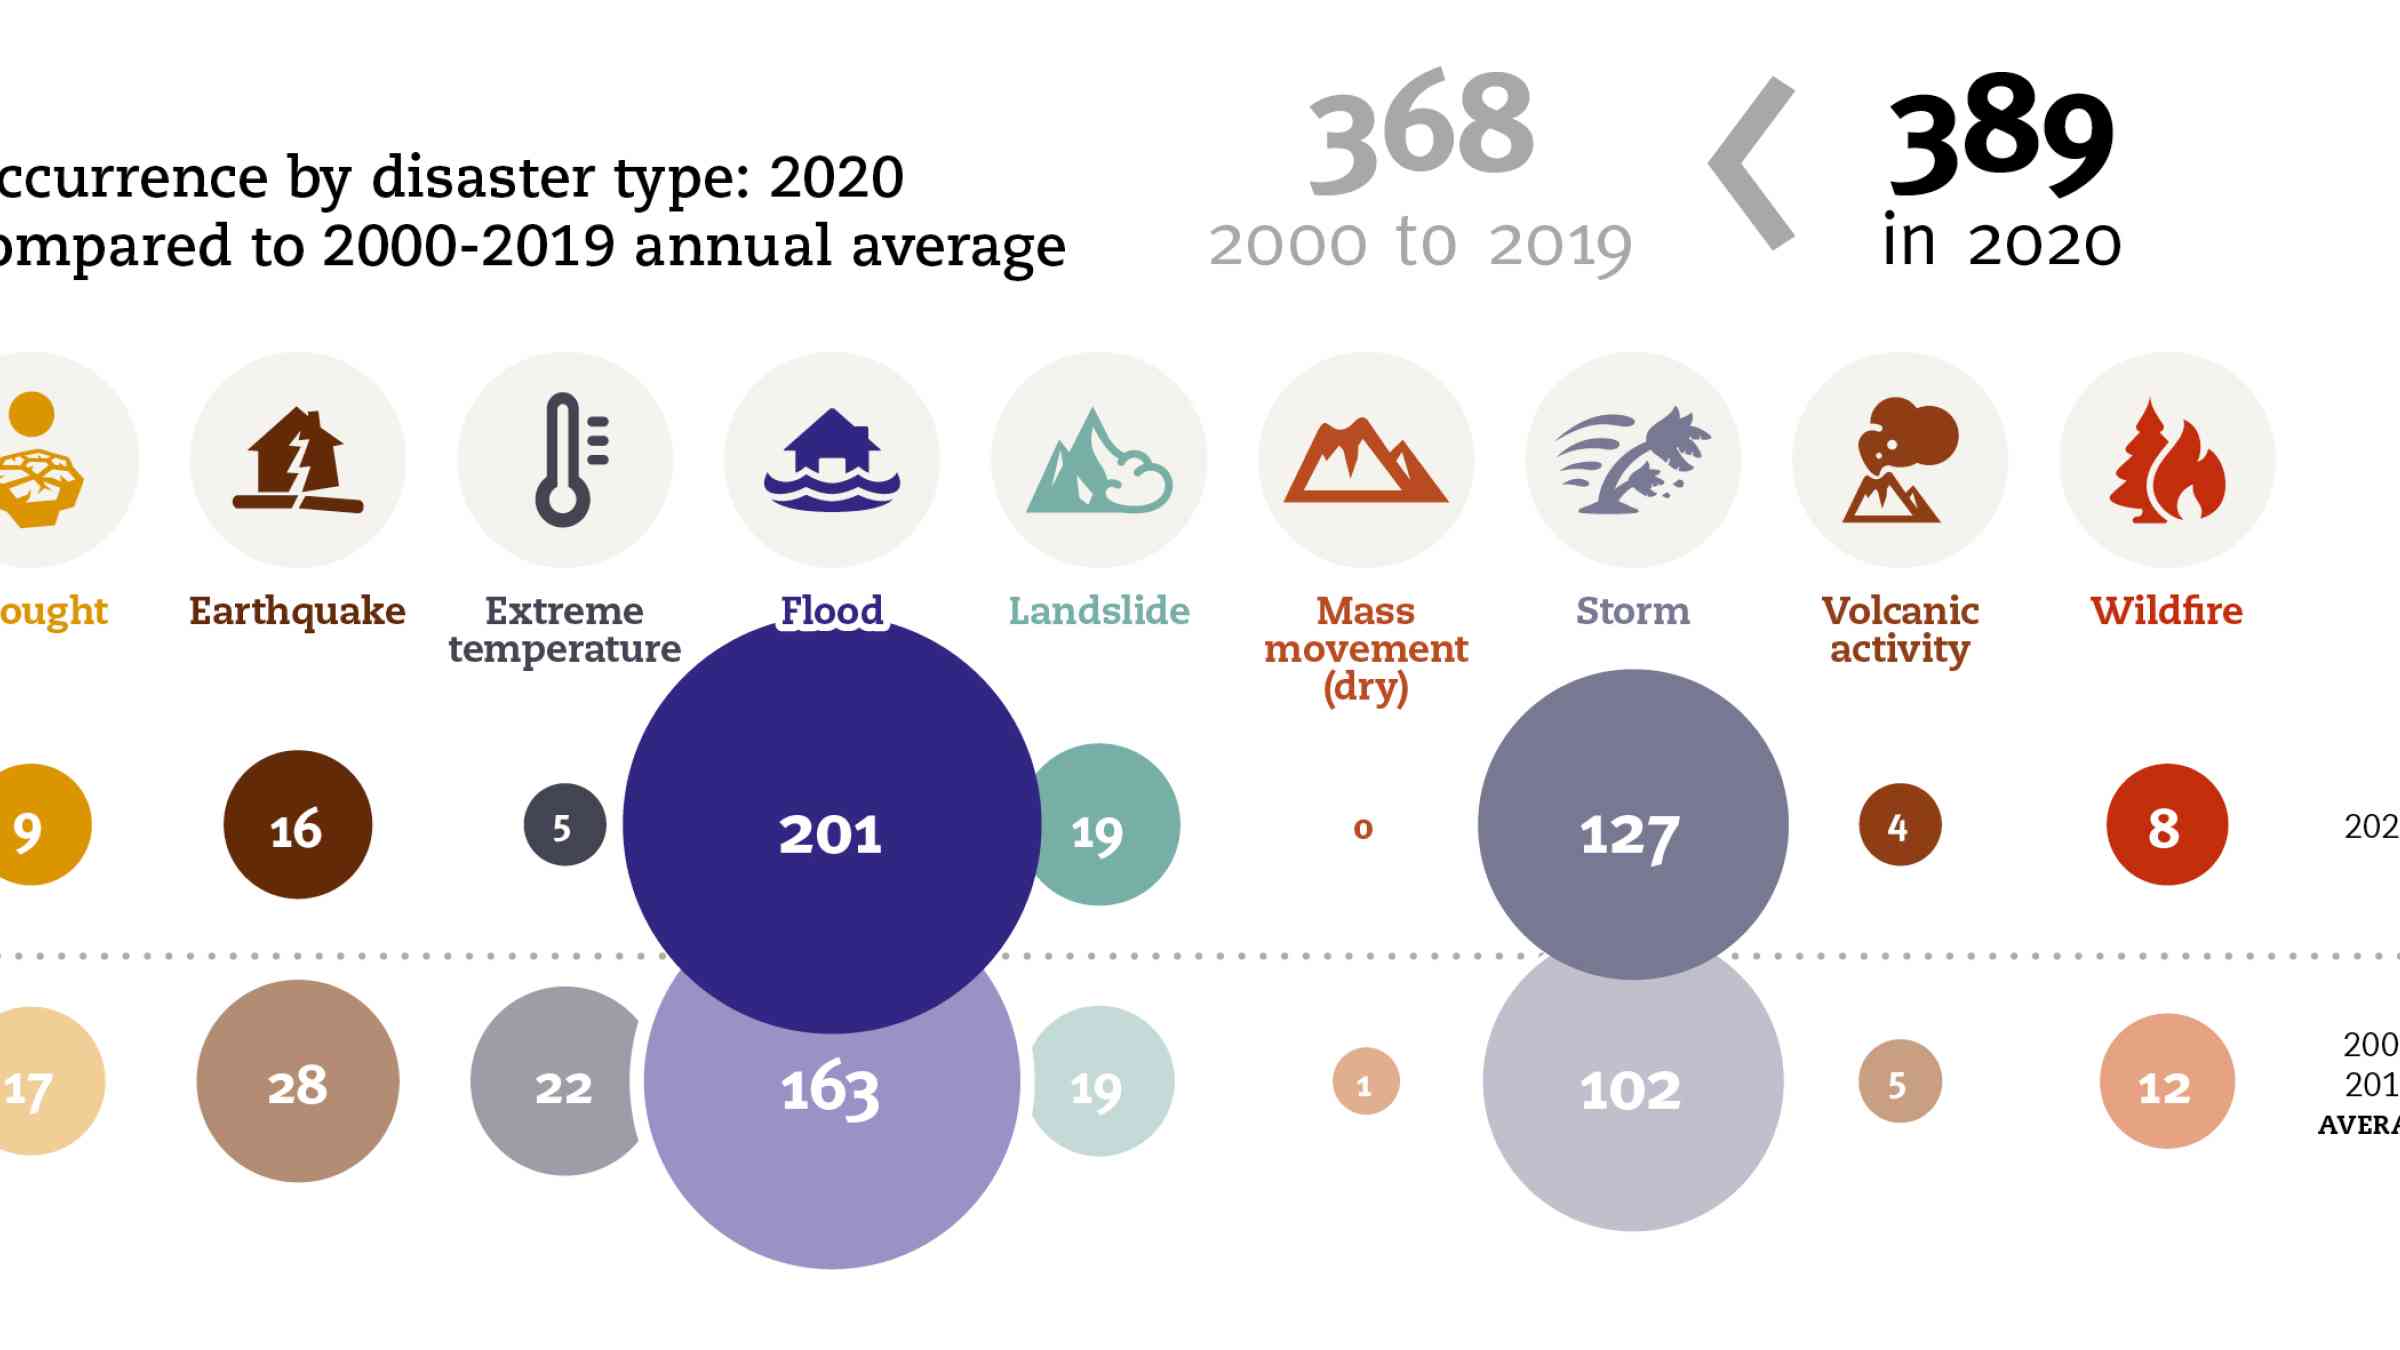 Non-COVID disaster trends in 2020